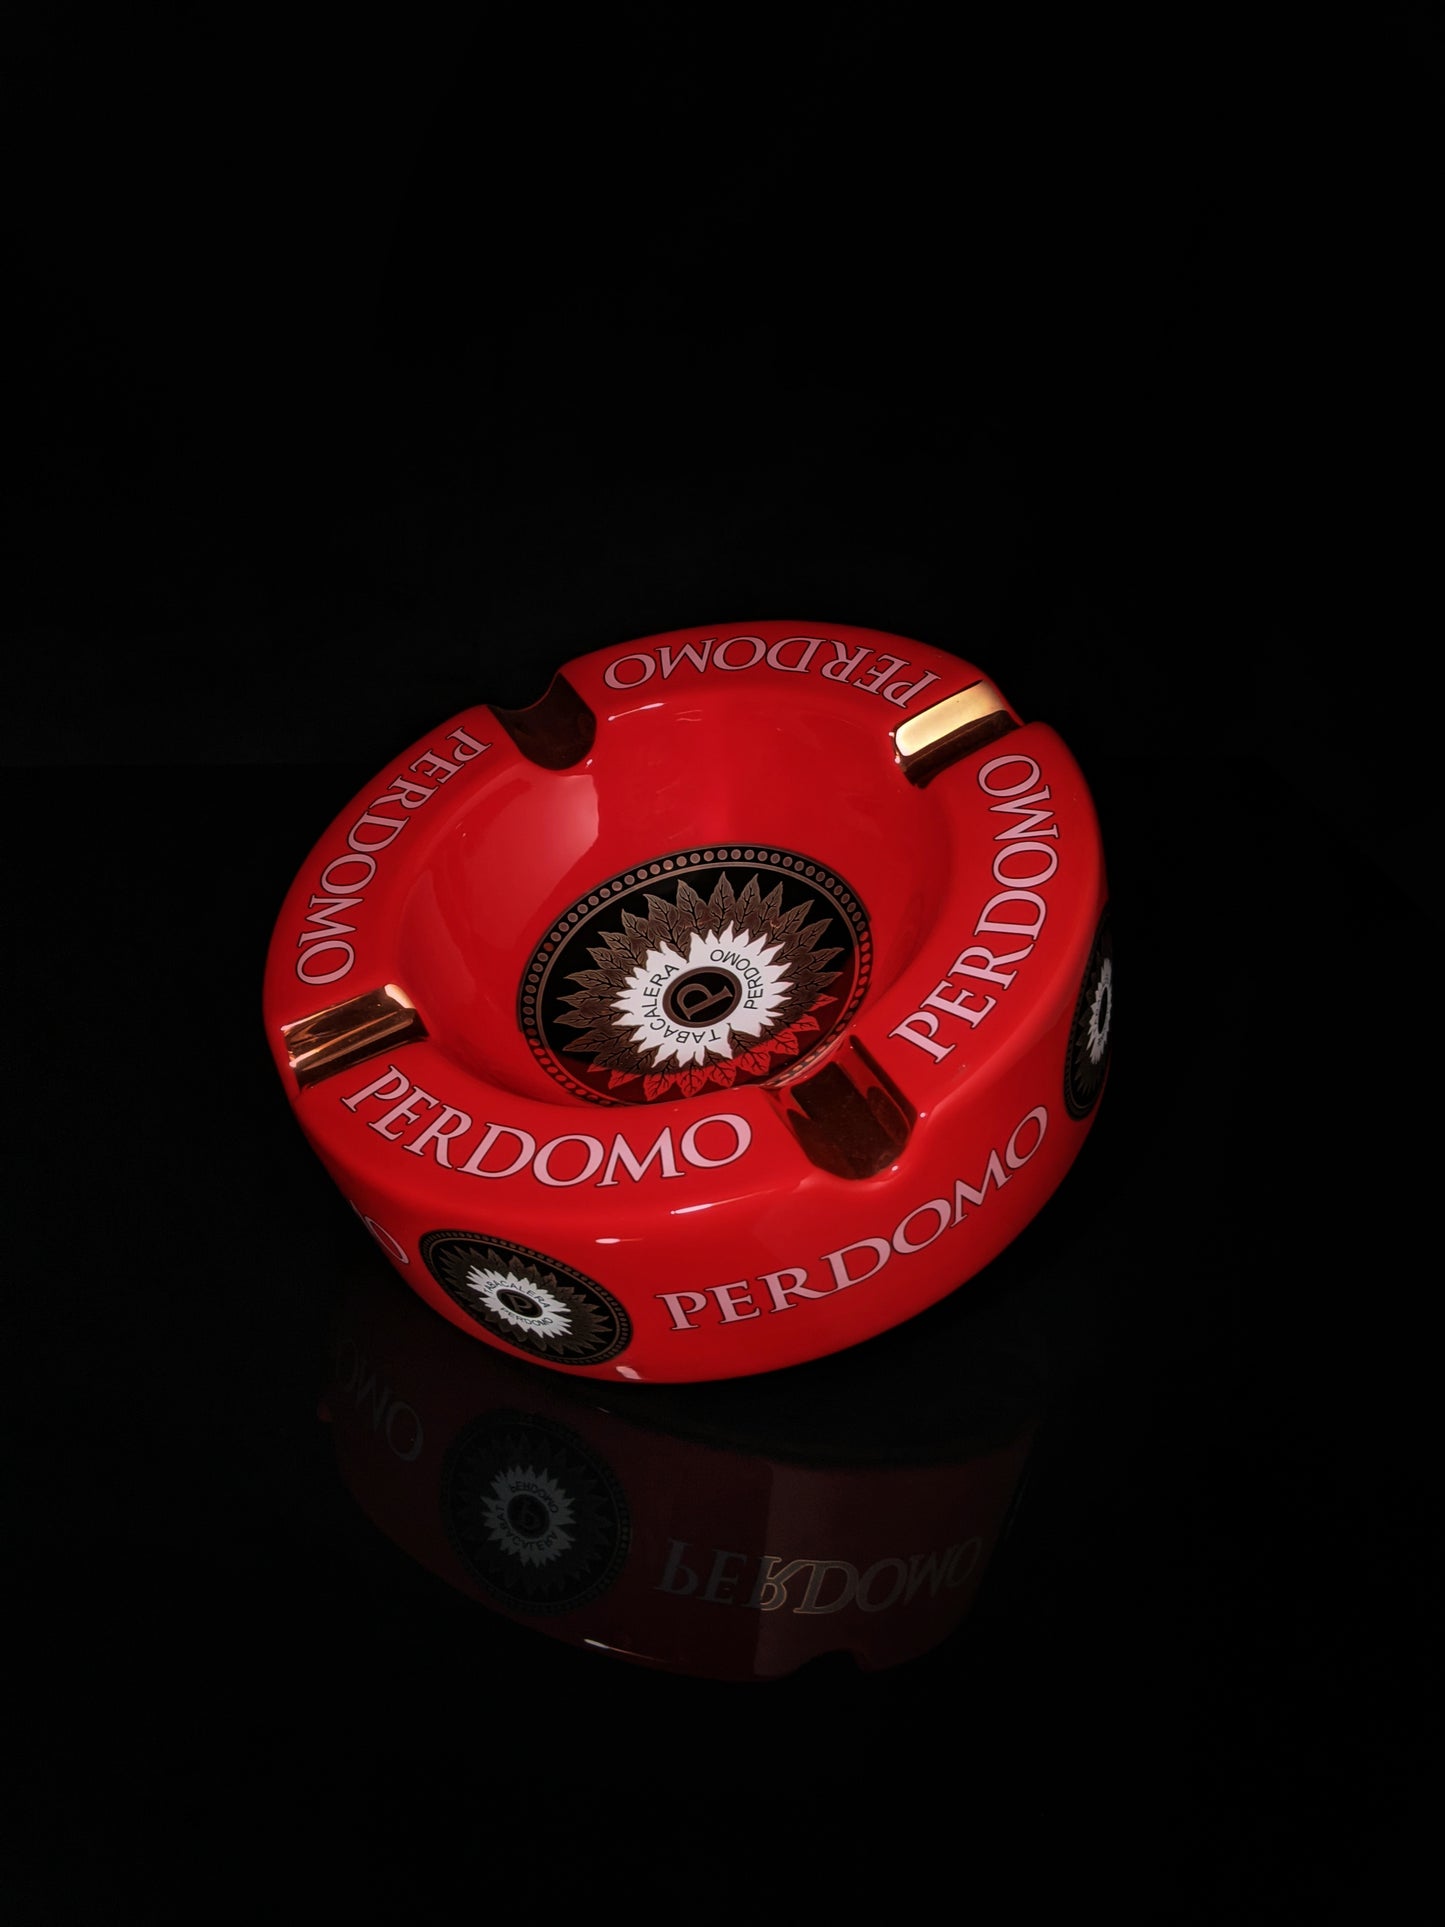 Perdomo Red and Gold  large ceramic ashtray 9" diameter NIB